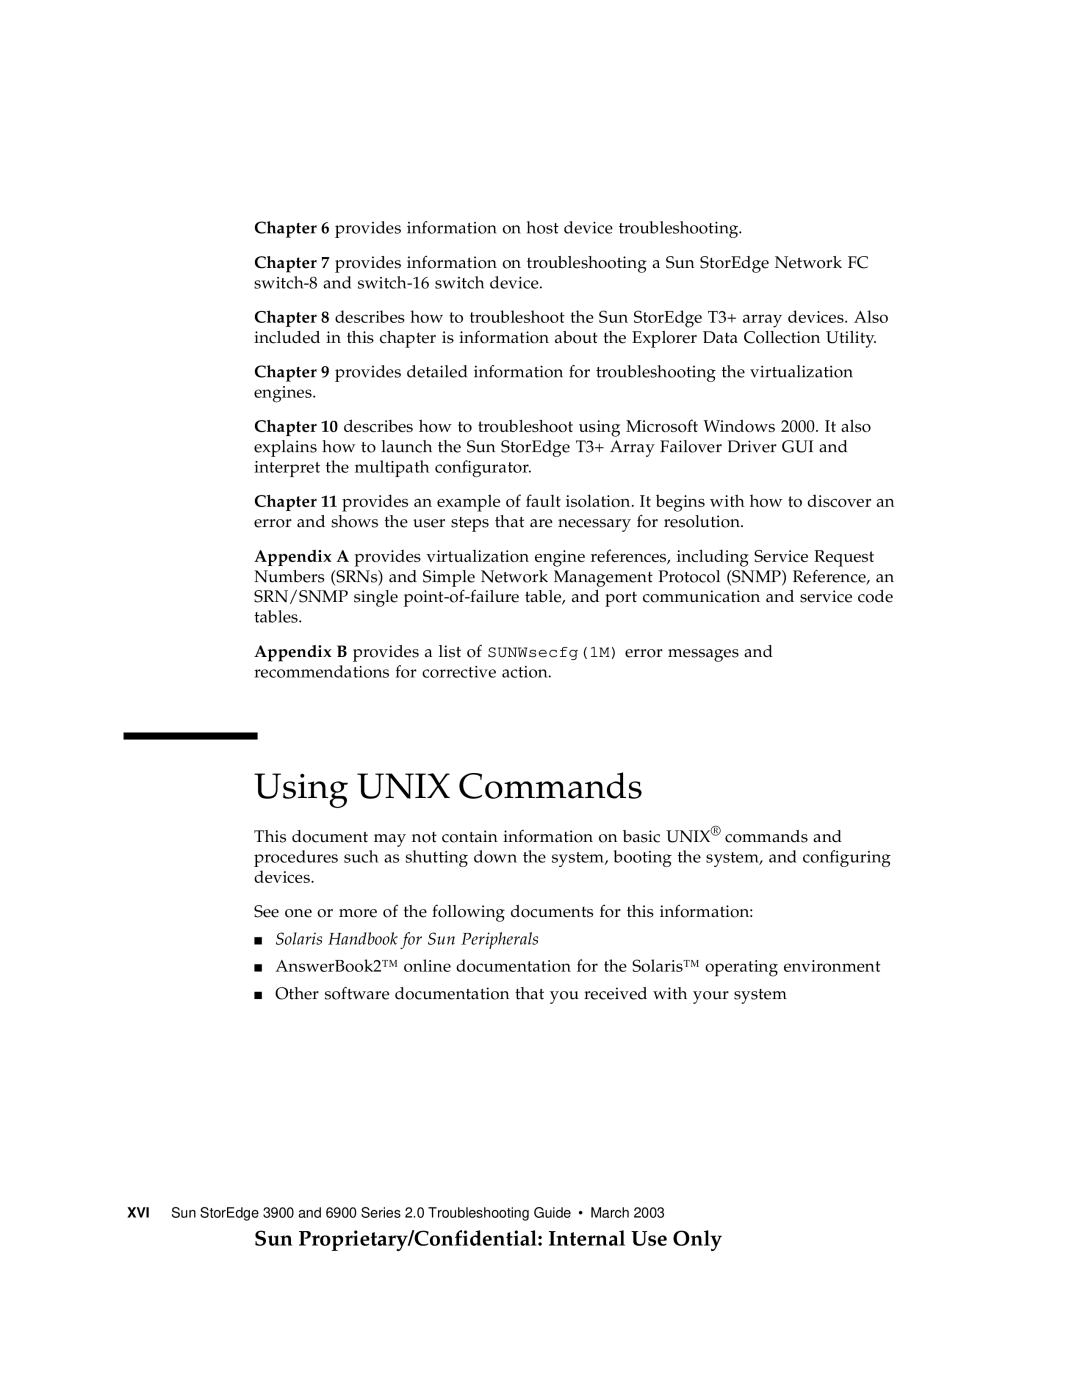 Sun Microsystems 3900, 6900 manual Using UNIX Commands, Solaris Handbook for Sun Peripherals 